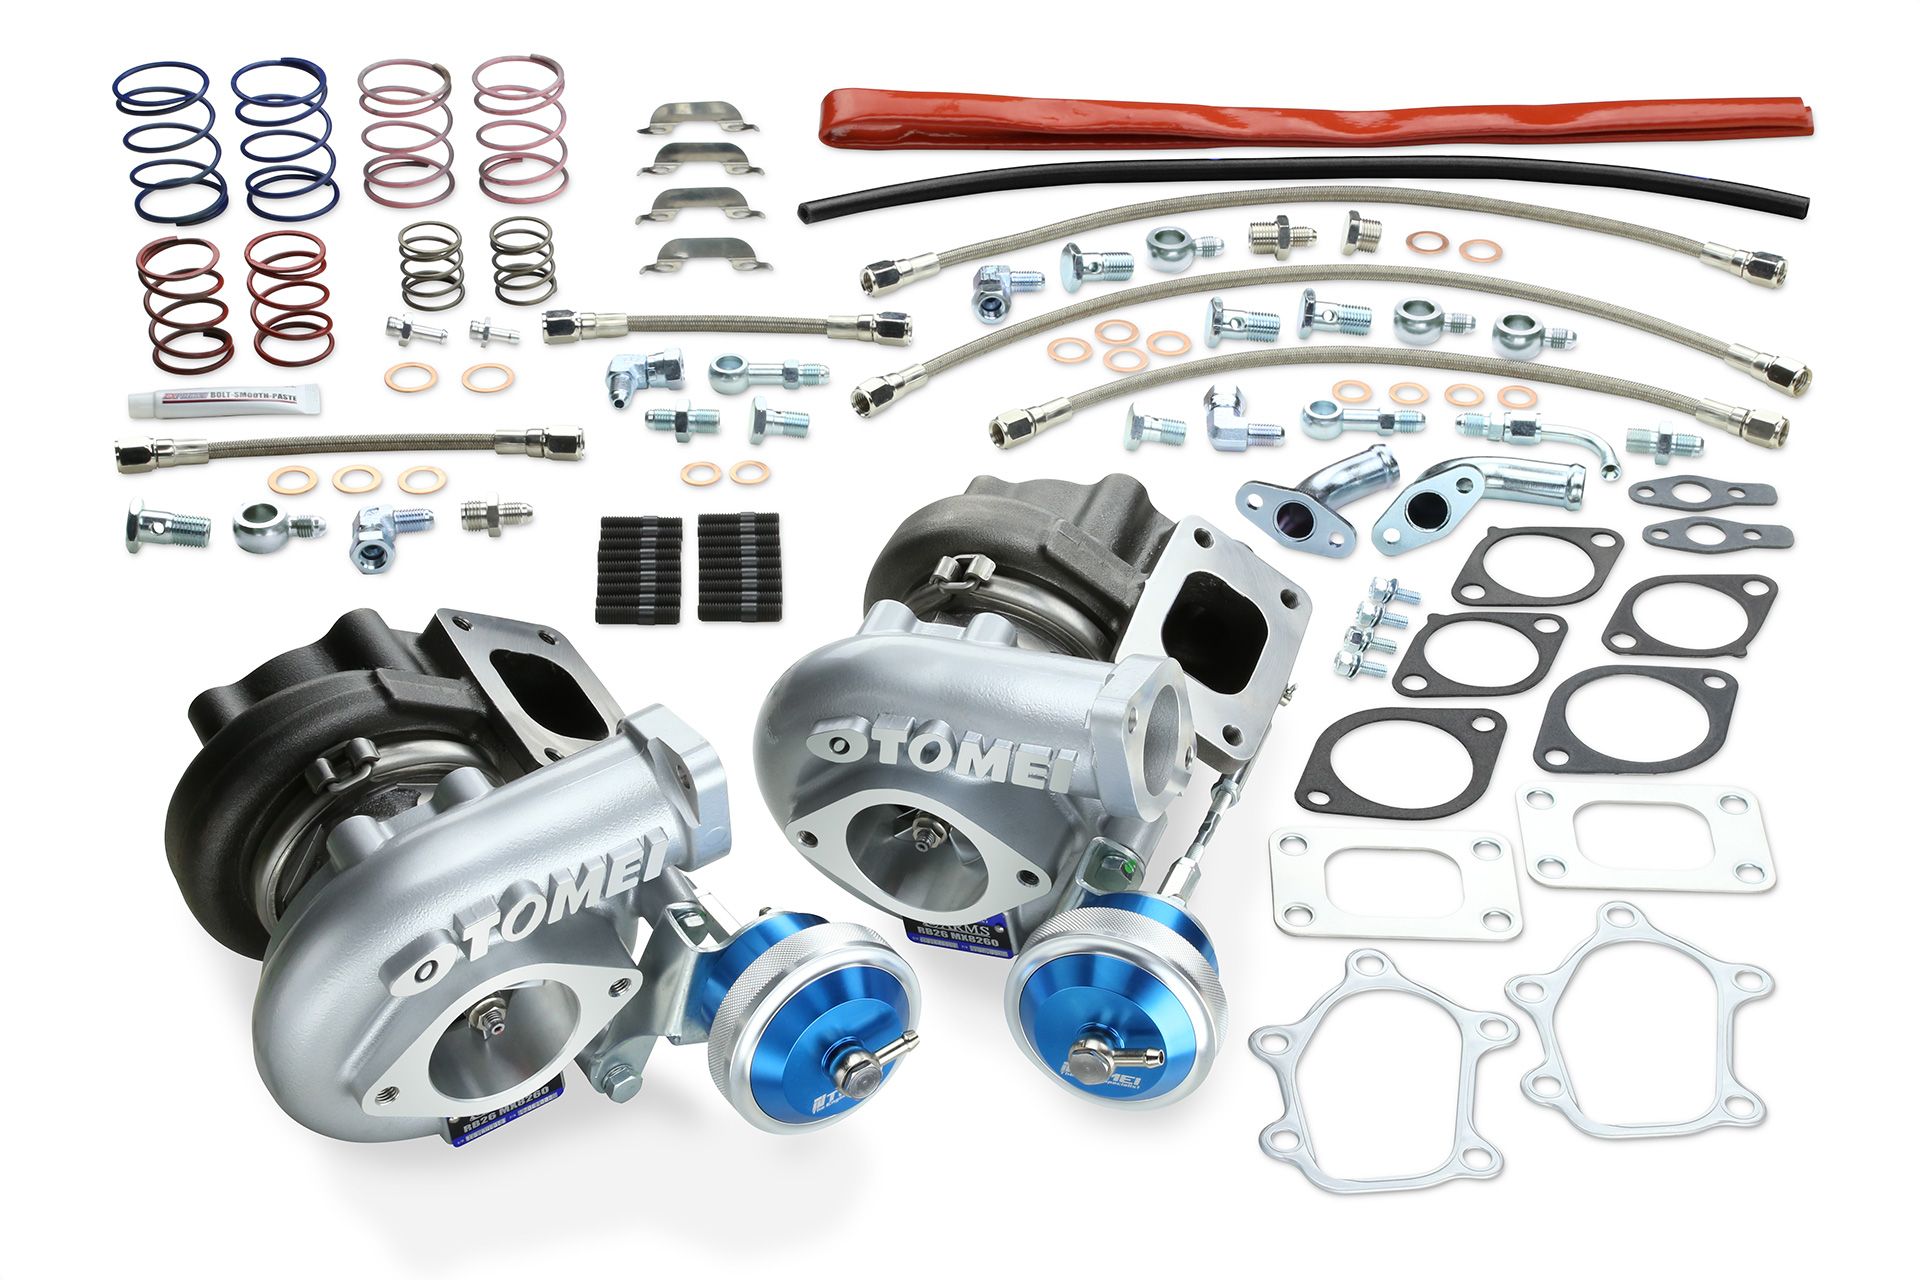 Tomei Turbocharger Kit Arms MX8260 RB26DETT - Nissan Skyline GT-R R32 R33 R34